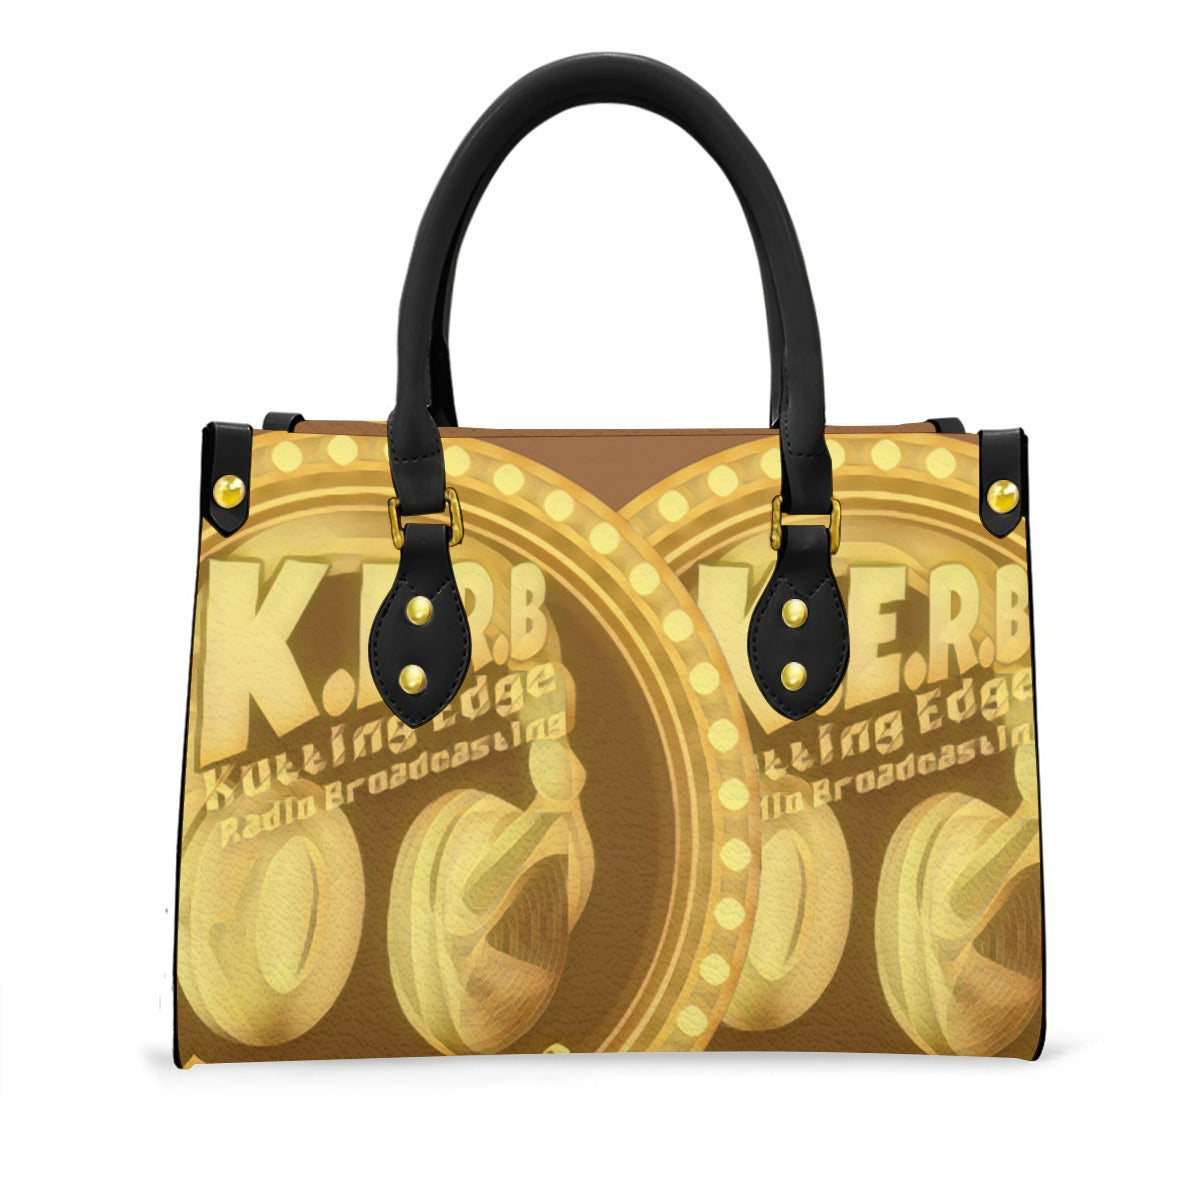 KERB Gold Rush Logo With Black Handle